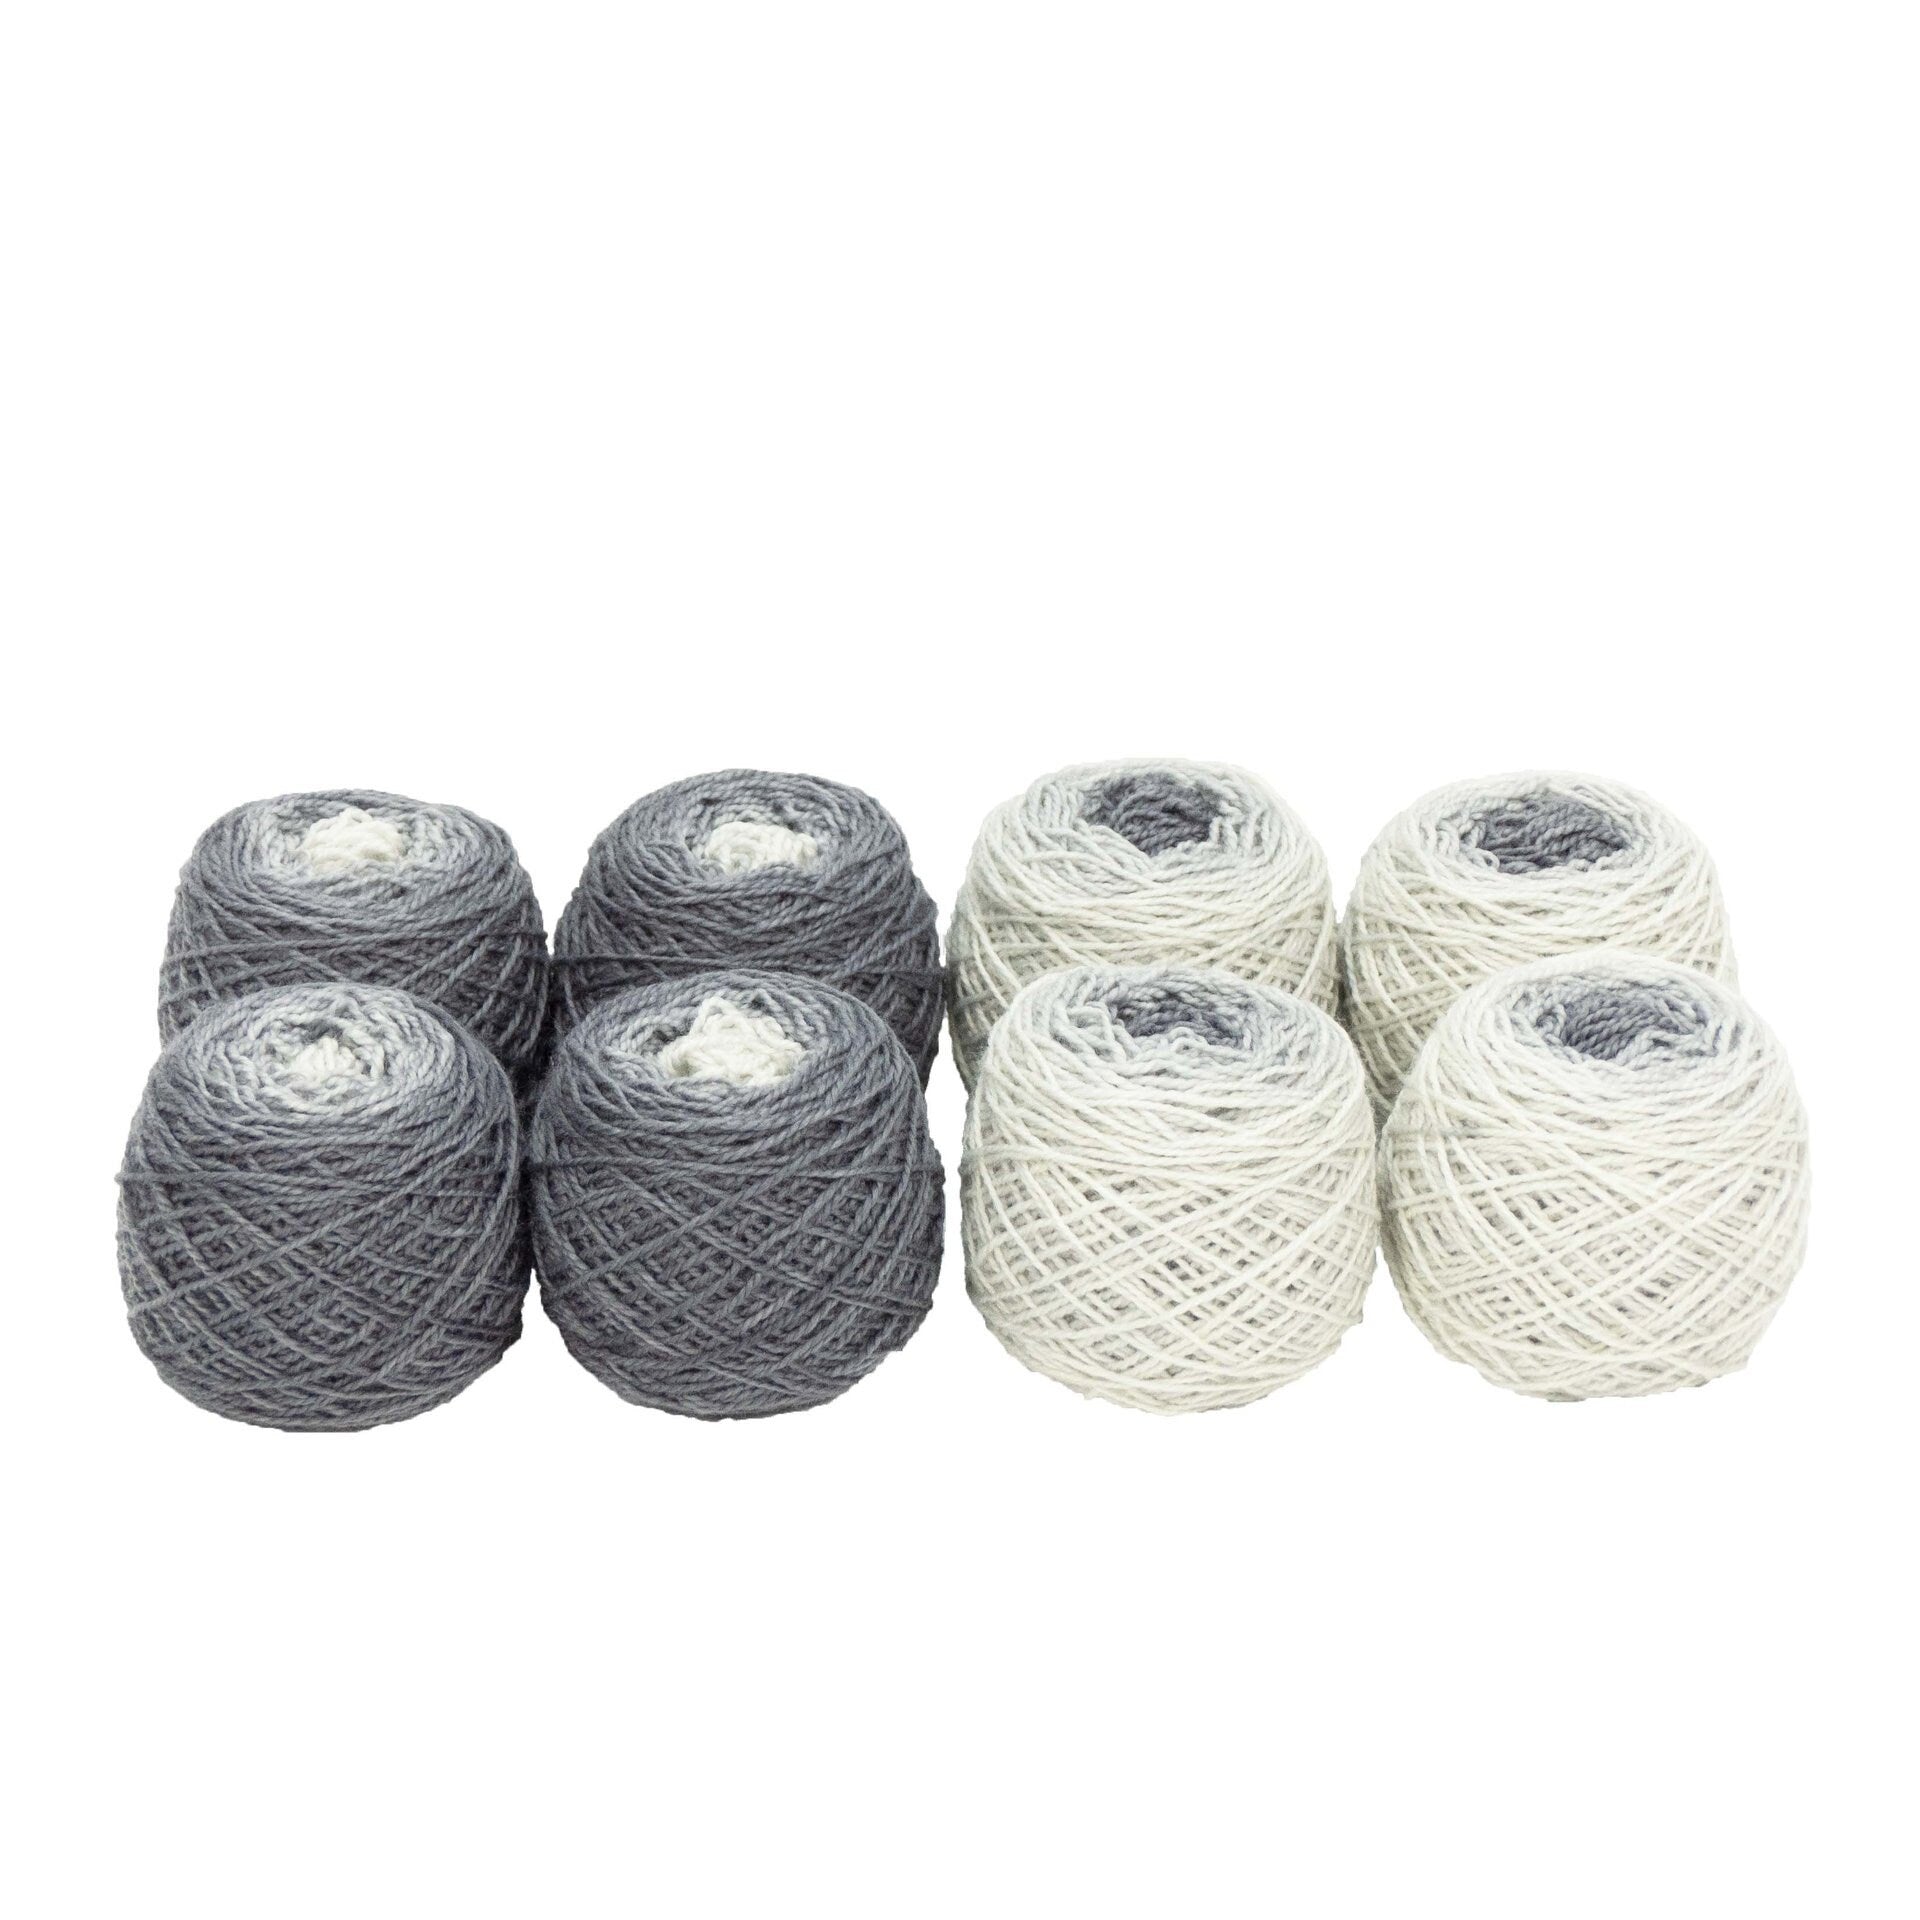 Shorty Sock Twins " Crone " - Lleap SW Merino/Nylon Handpainted Semisolid Gradient Sock Yarn Set